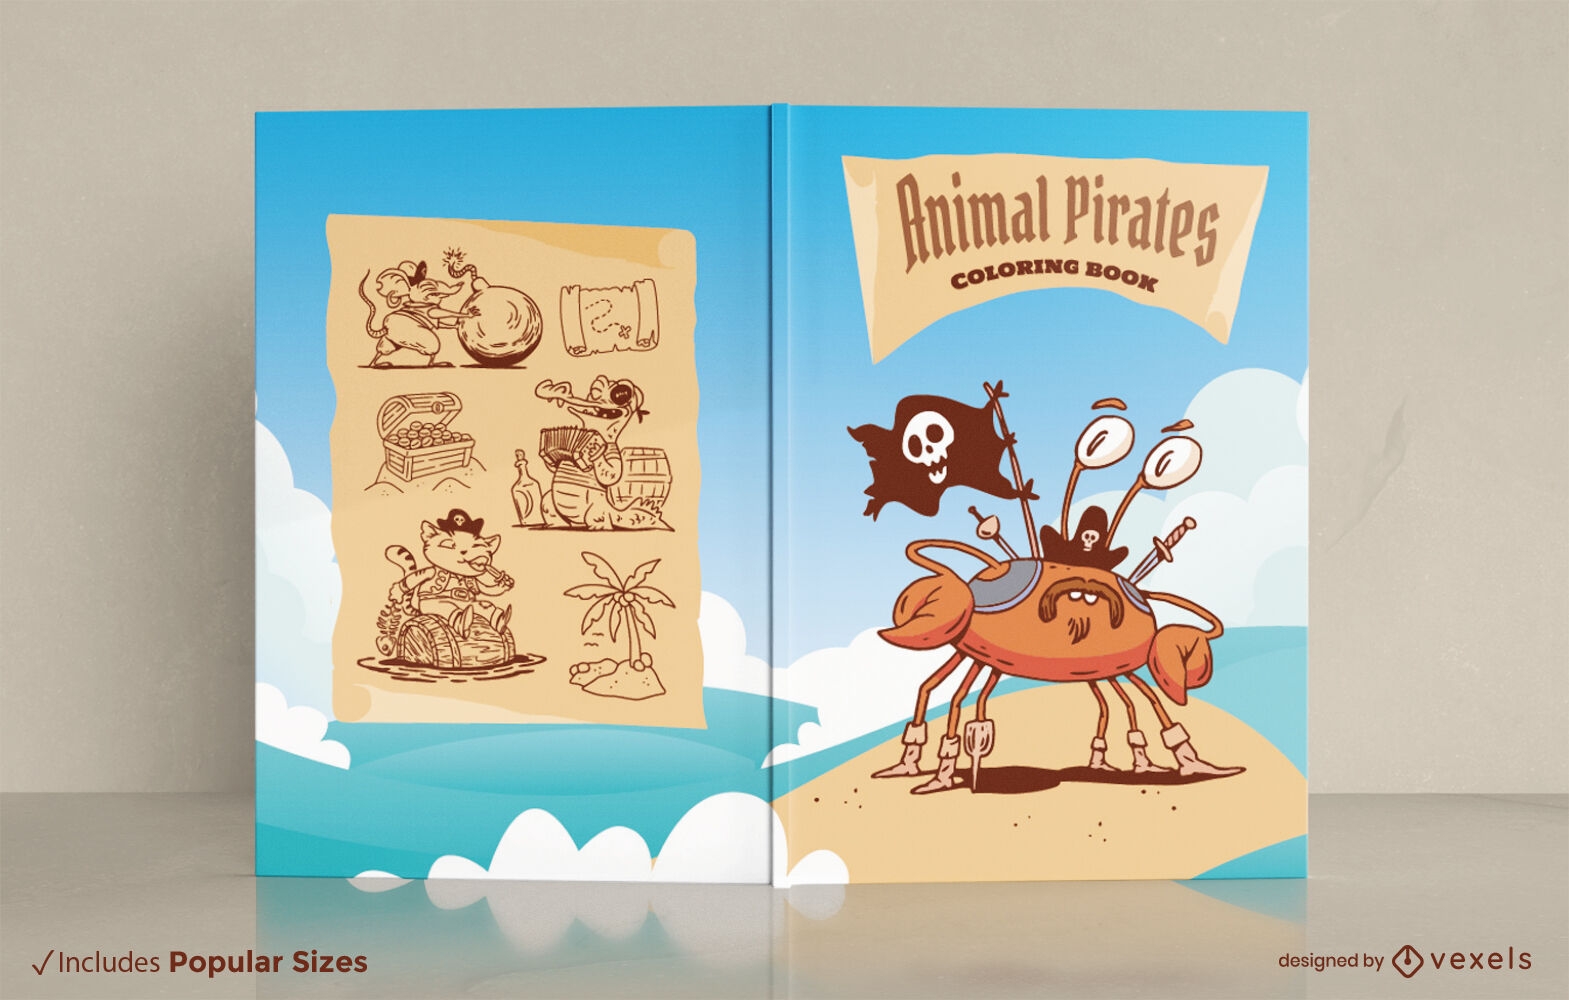 Pirate crab animal book cover design